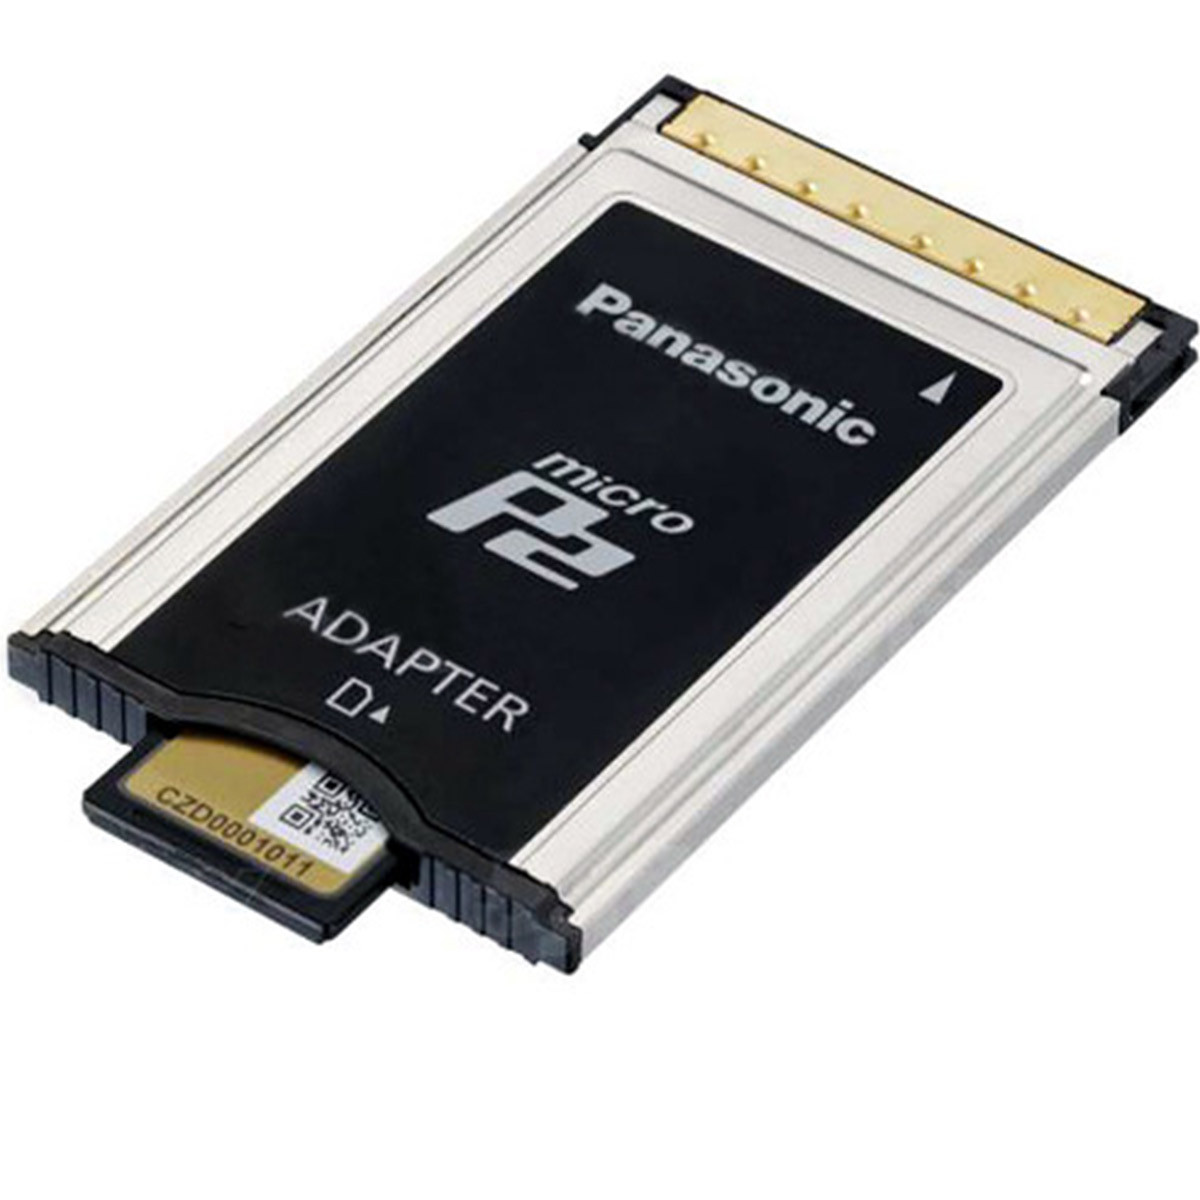 Adaptateur carte SD vers microSD Pour monter une carte SD à la place d'une  MicroSD Pour monter une carte SD à la place d'une MicroSD au meilleur prix